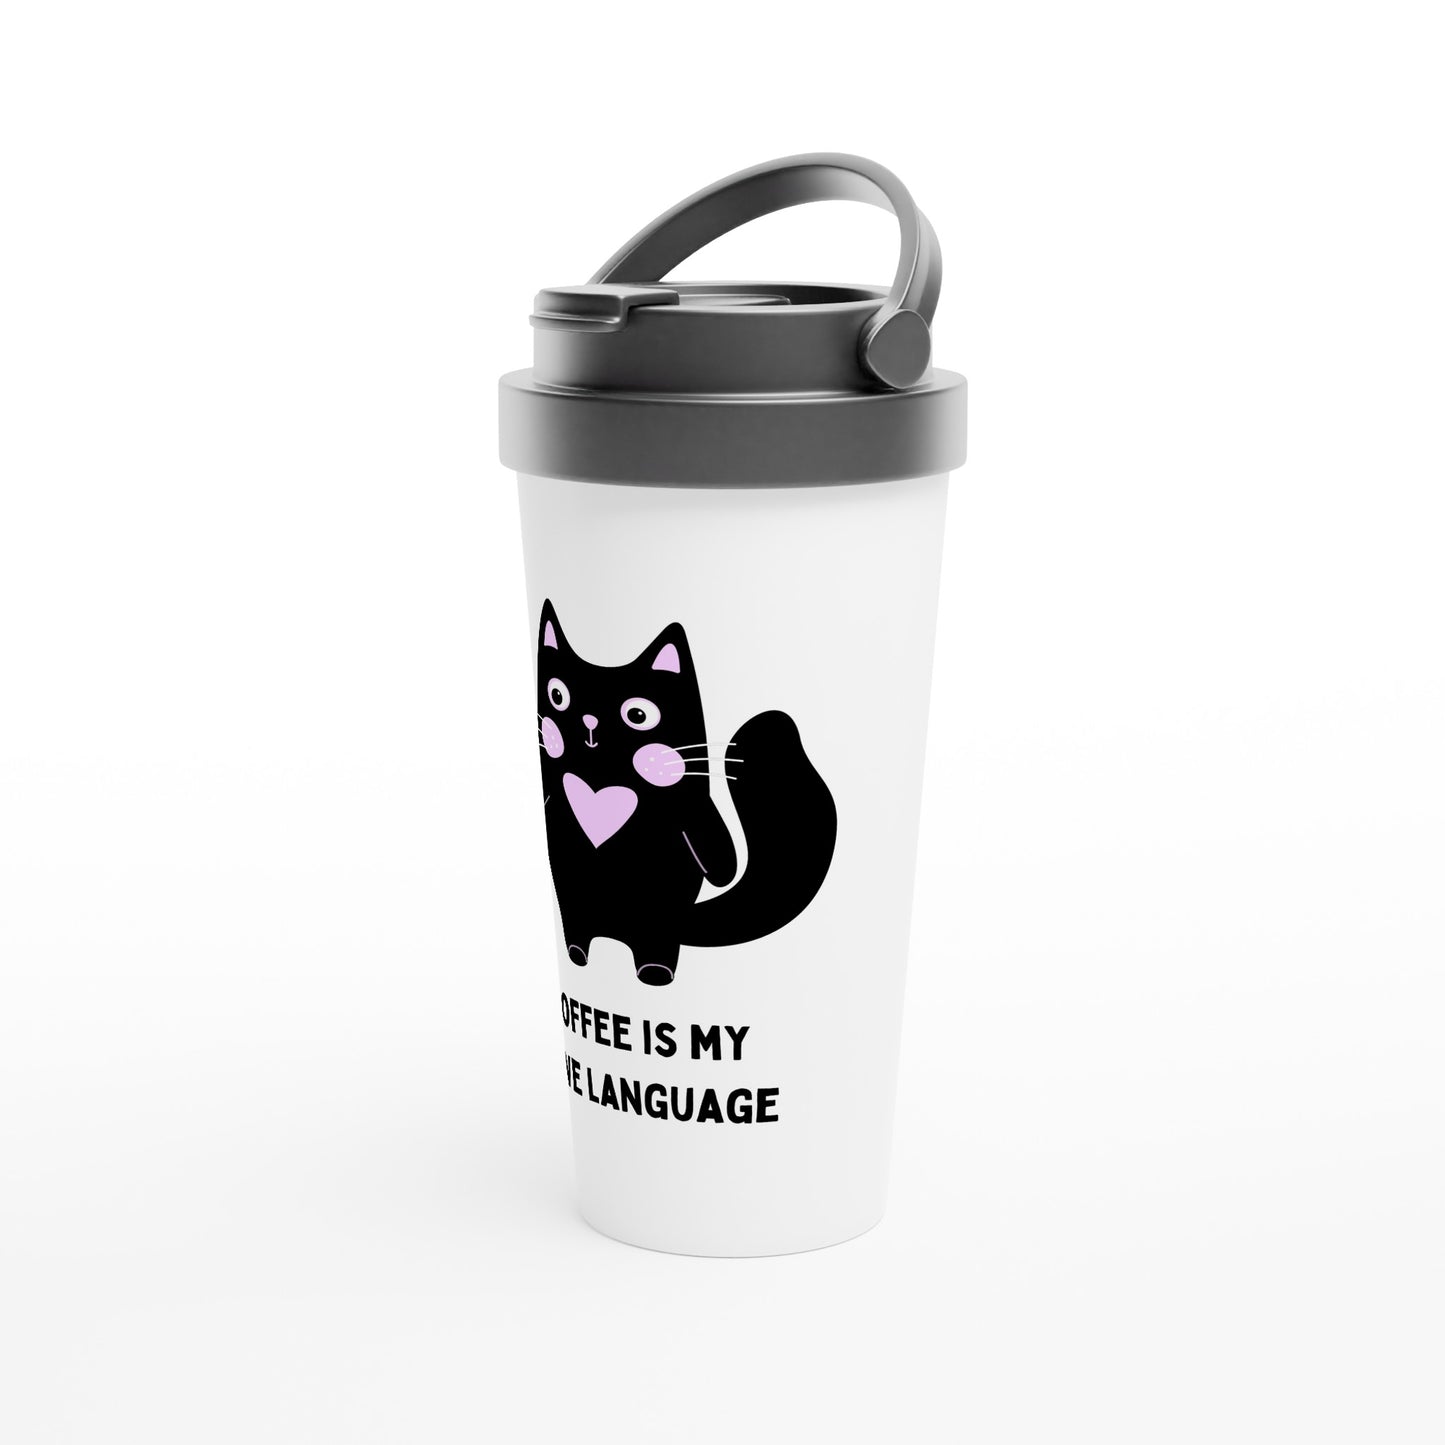 Coffee Is My Love Language - White 15oz Stainless Steel Travel Mug Travel Mug animal Coffee